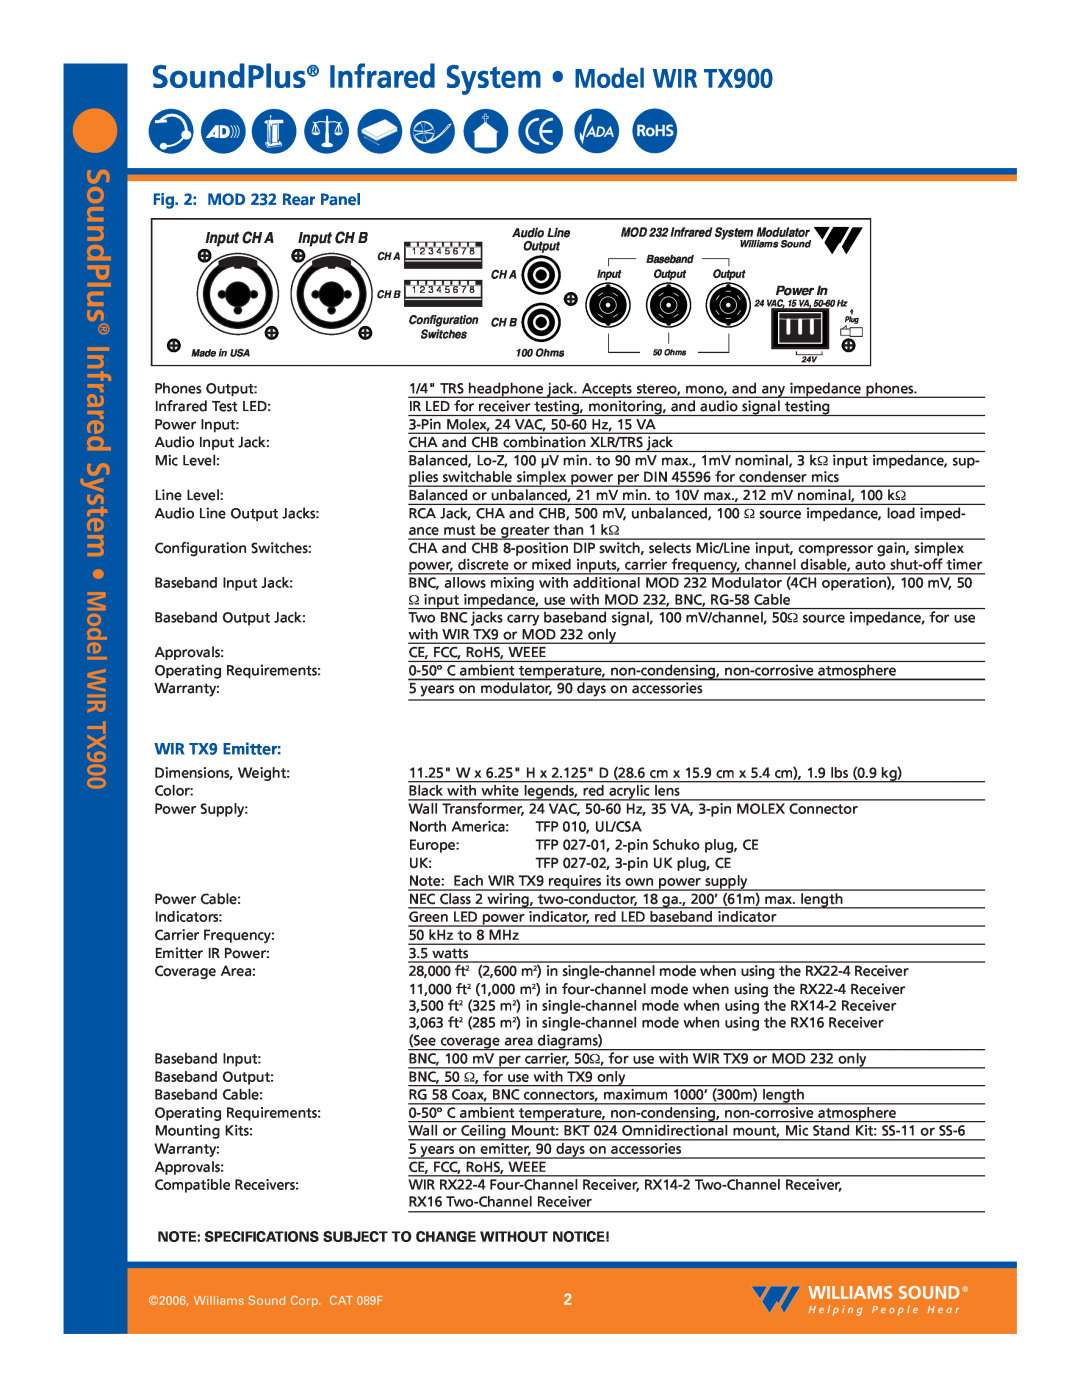 Williams Sound WIRTX900 specifications SoundPlus Infrared System Model WIR TX900, Input CH A, Input CH B 